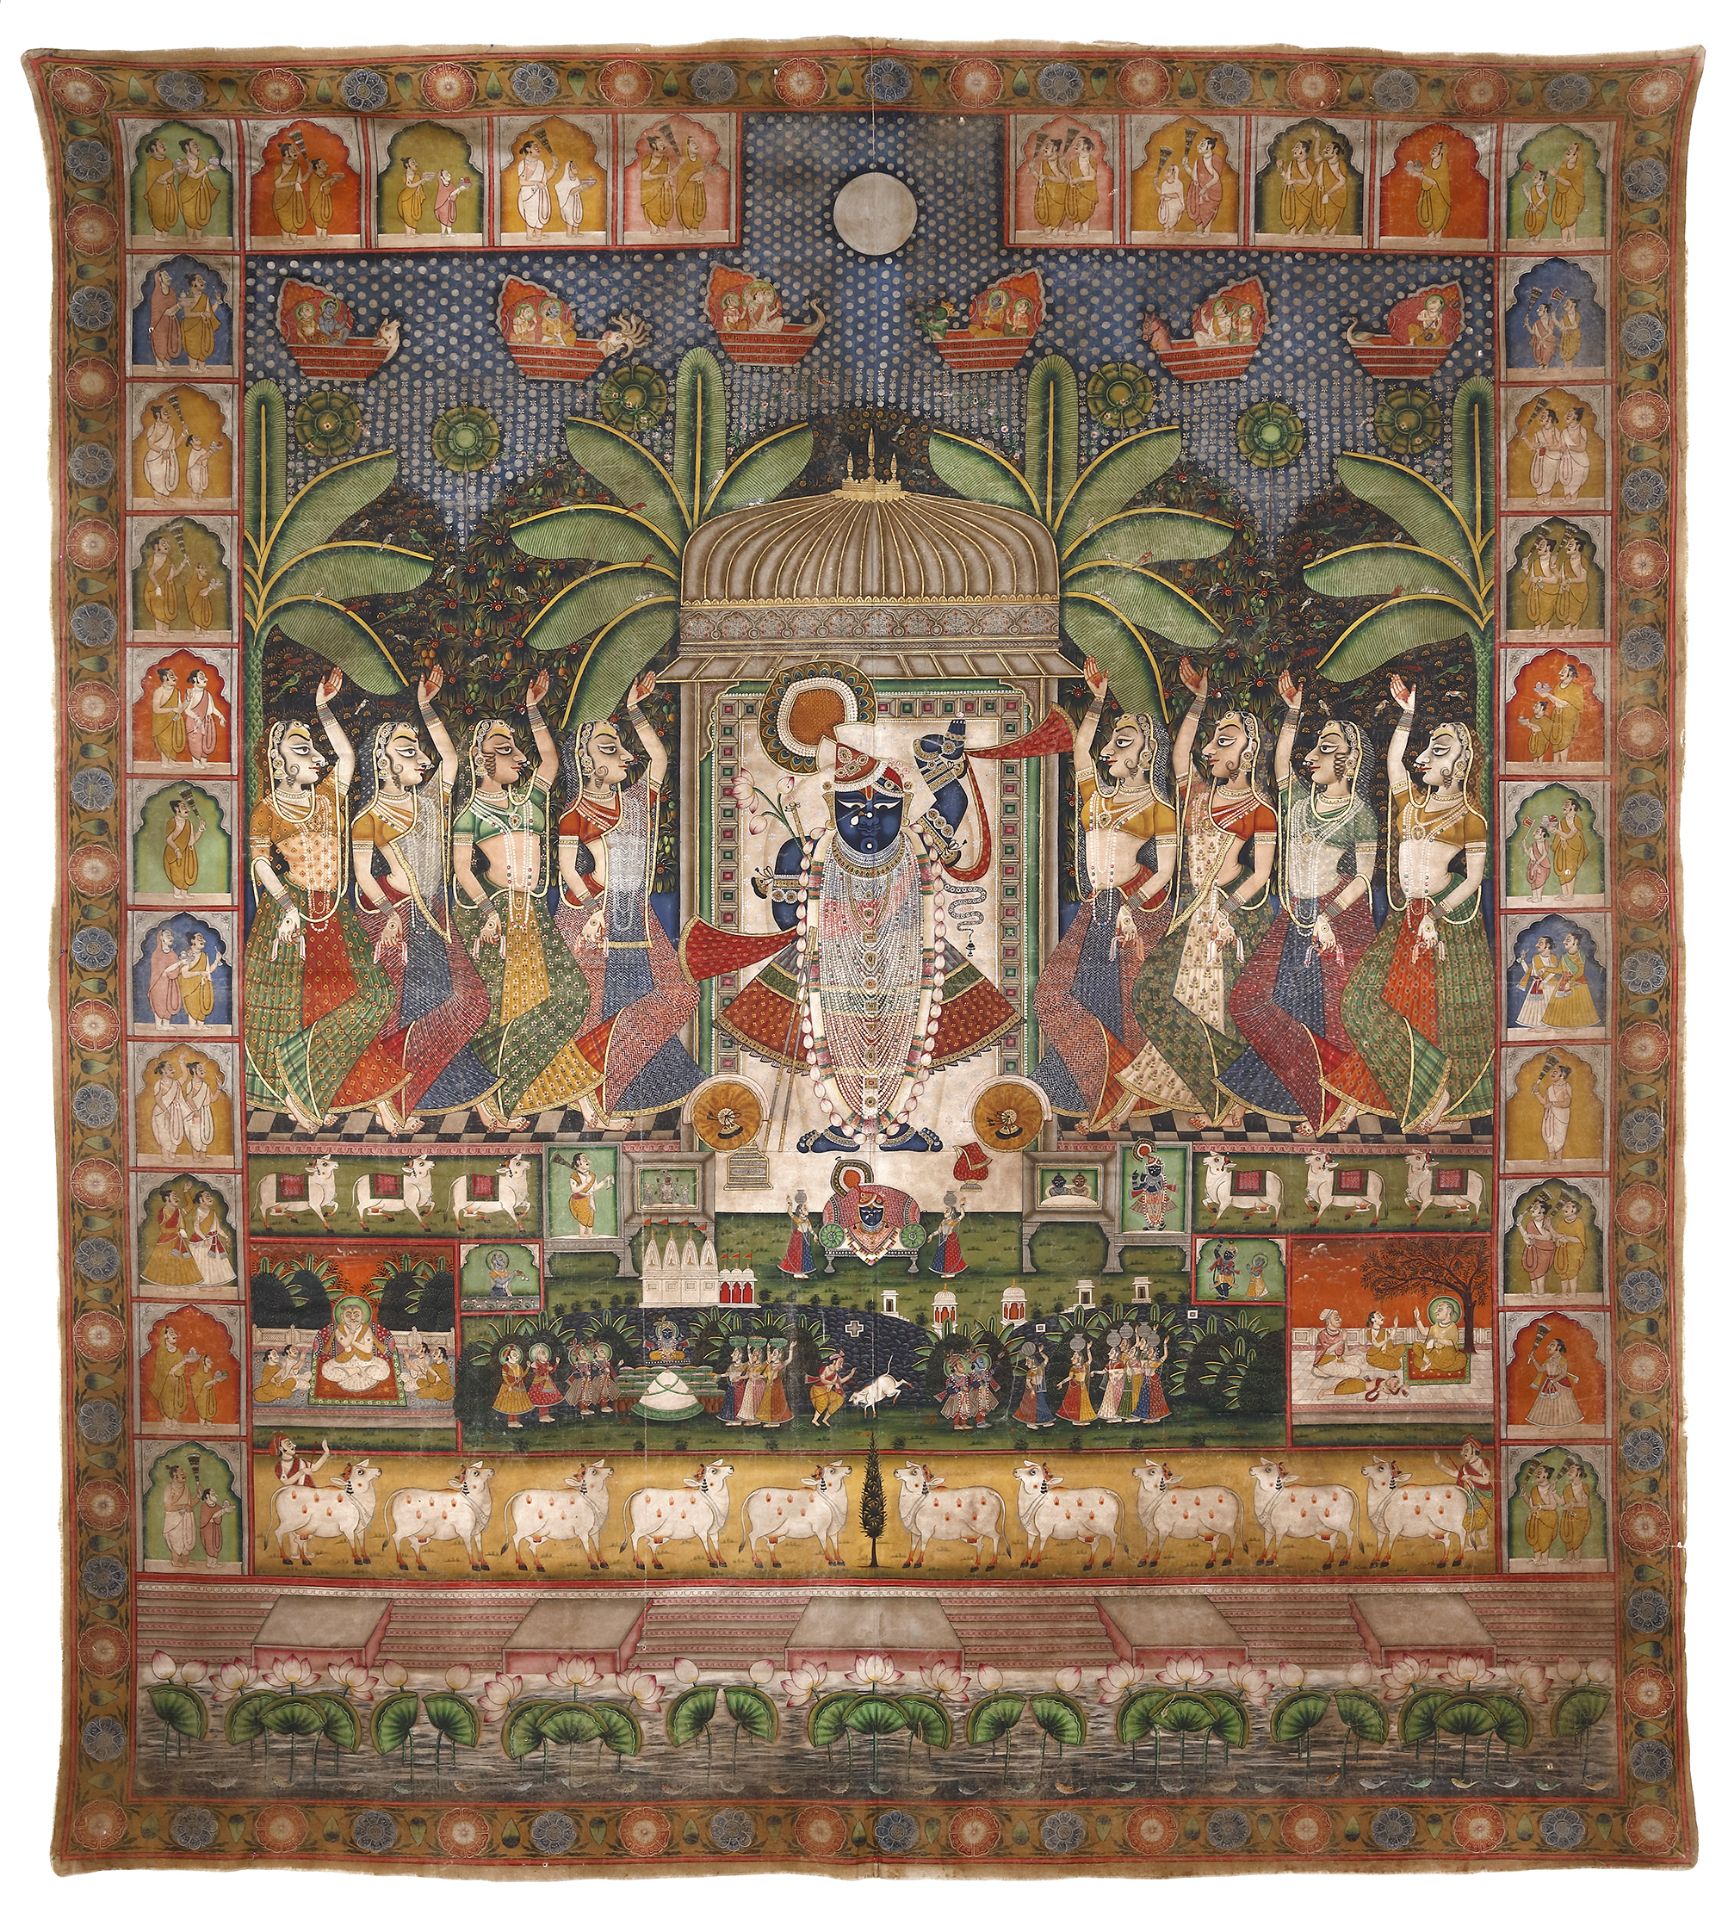 A LARGE PICCHVAI OF SHRI NATH JI, NORTH INDIA, RAJASTHAN, KOTA, 19TH CENTURY - Image 2 of 2